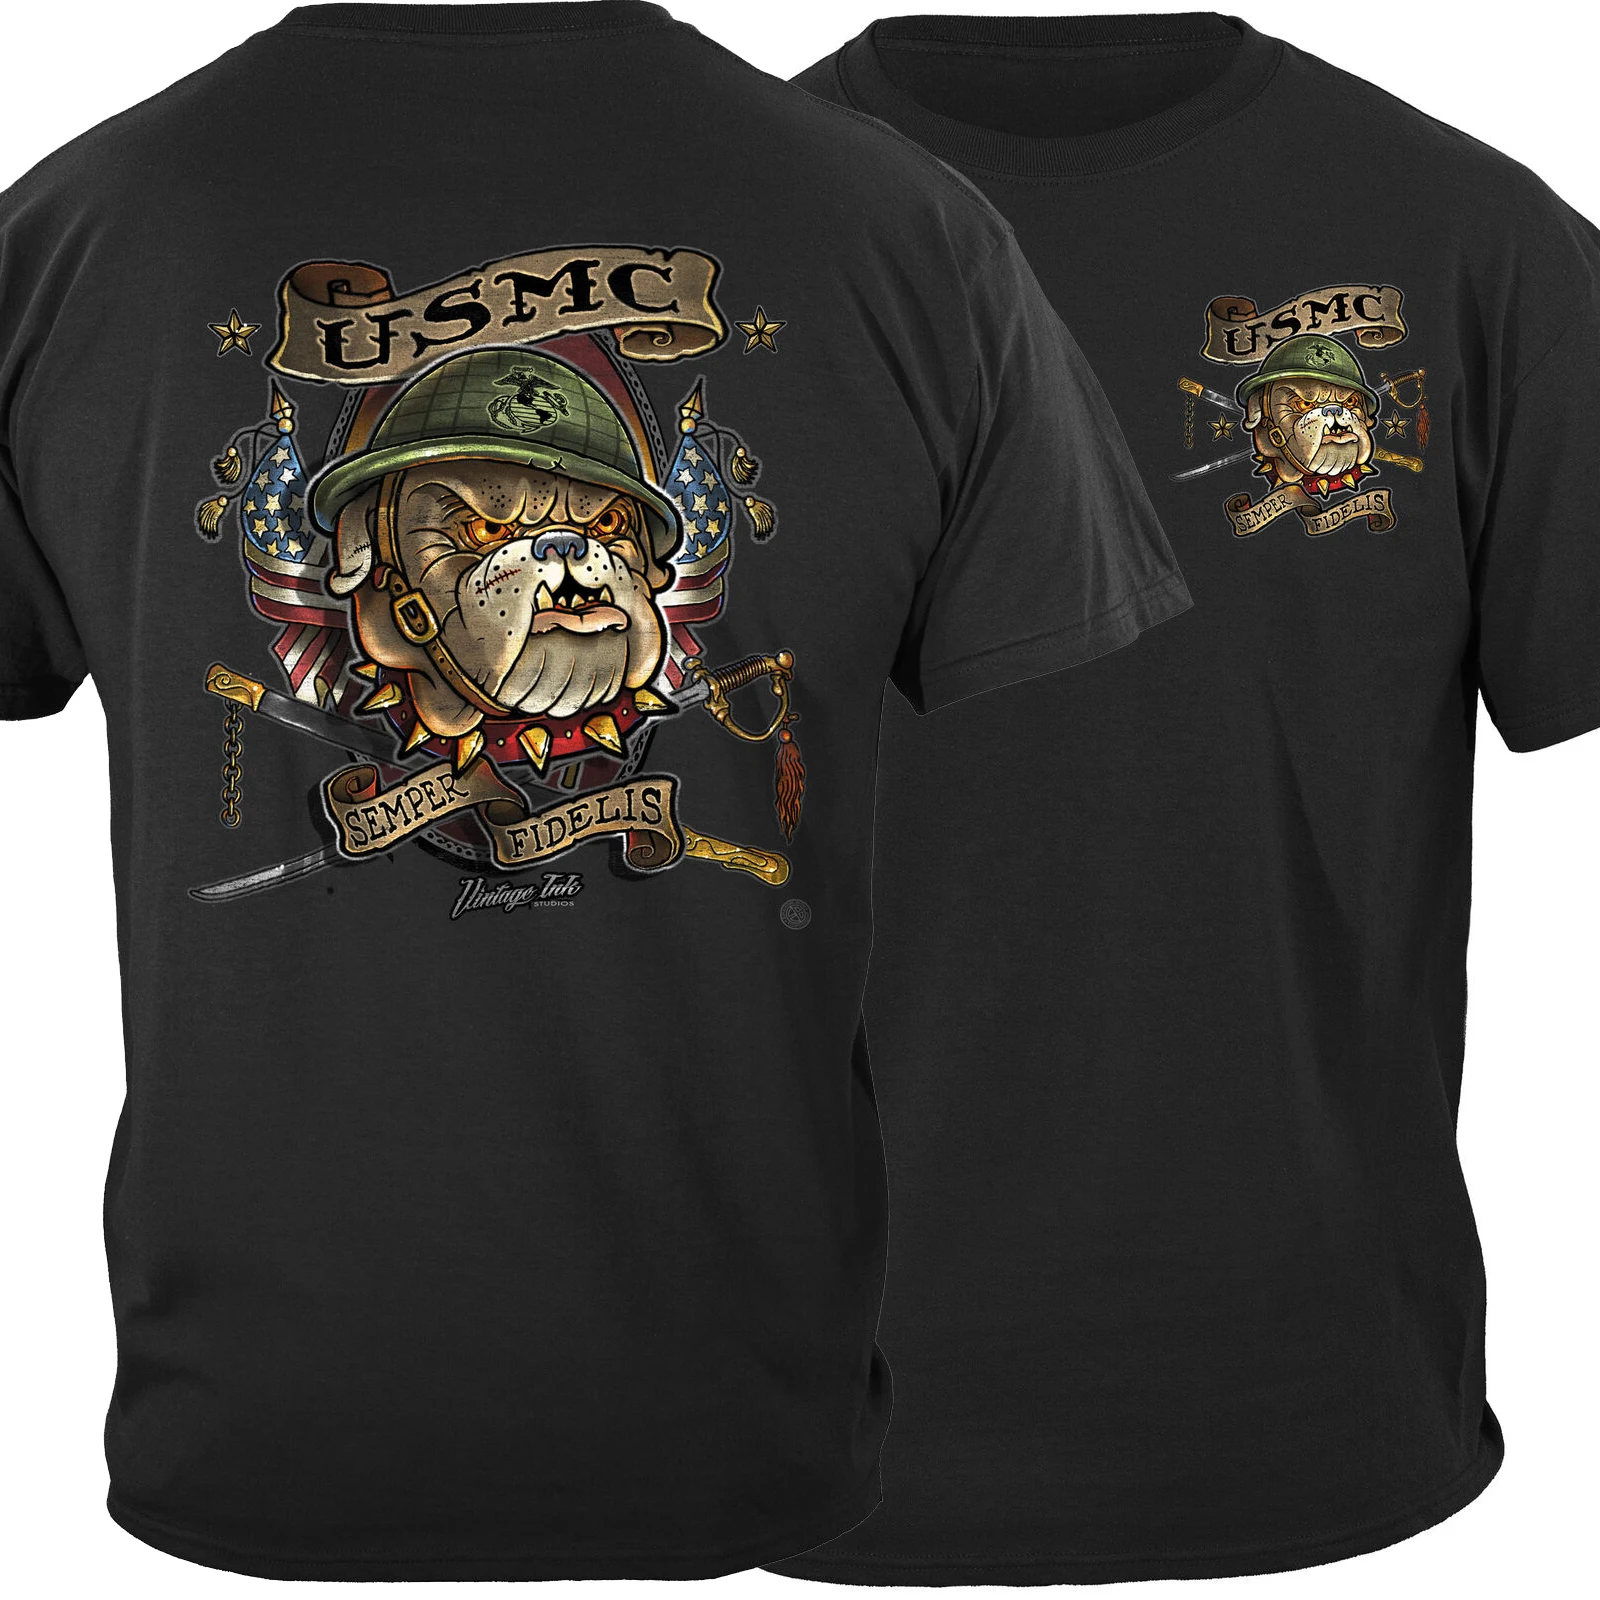 

USMC Marine Corps Bull Dog Semper Fidelis T Shirt. 100% Cotton Short Sleeve O-Neck Casual T-shirts Loose Top Size S-3XL